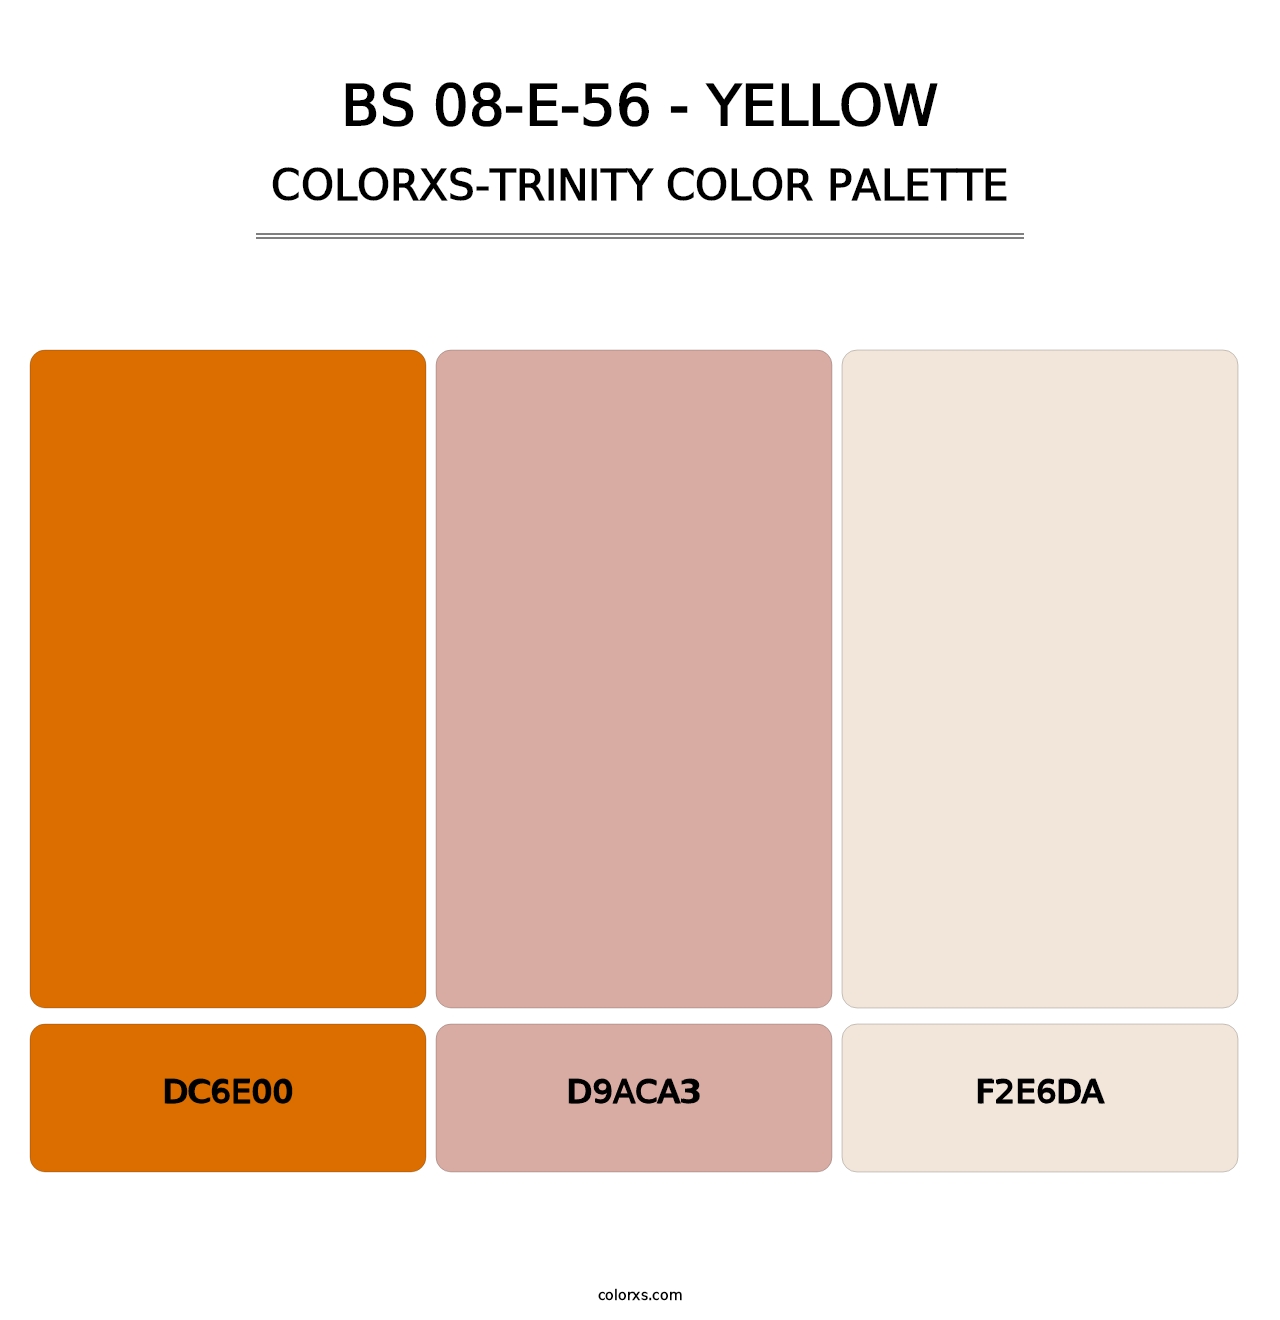 BS 08-E-56 - Yellow - Colorxs Trinity Palette